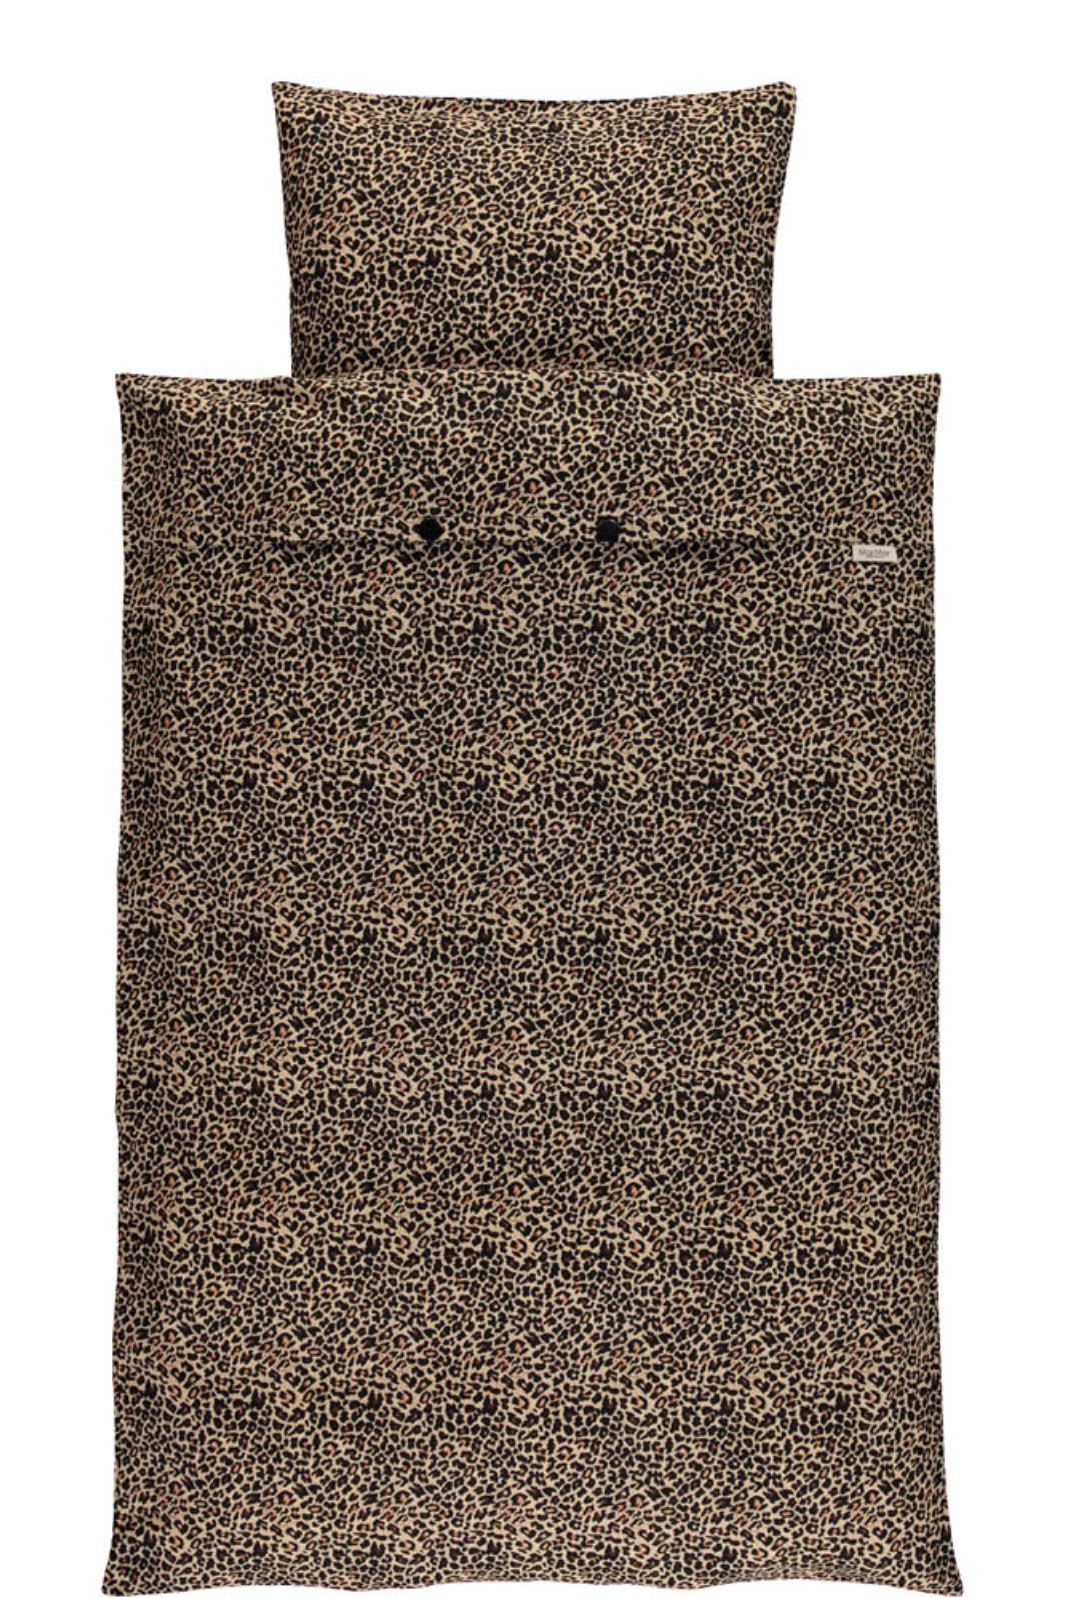 MarMar - Bed Linen - Brown Leo - 0902 - Light Leopard Print Acc Sengetøj 